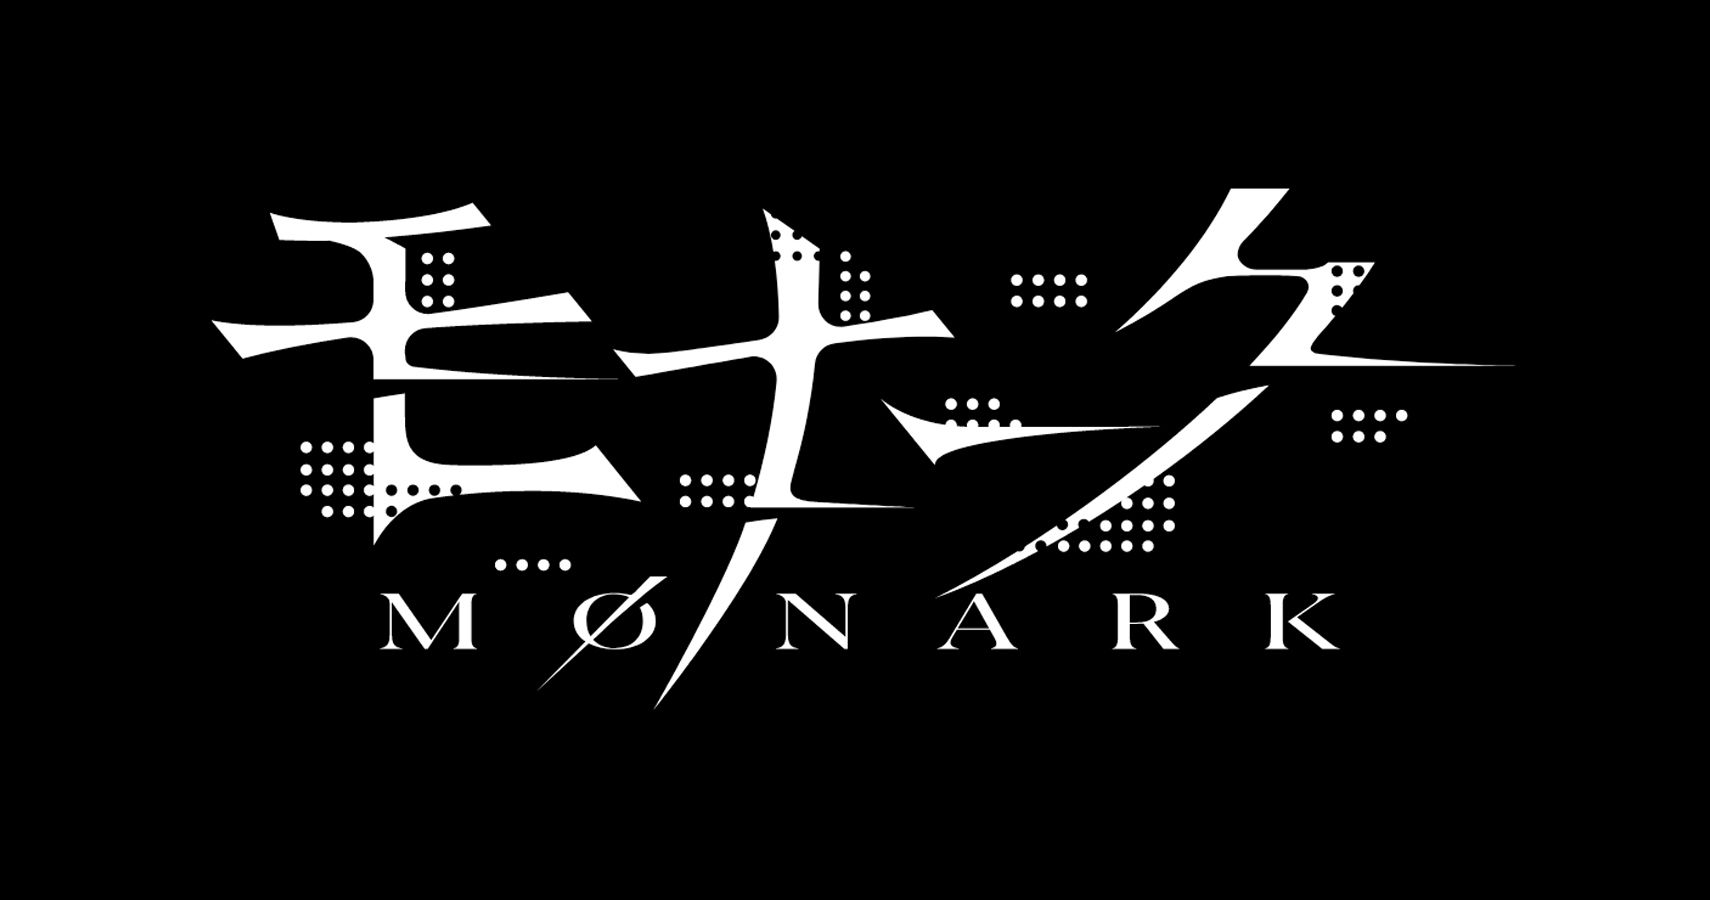 The new logo for Monark, from the creators of Shin Megami Tensei